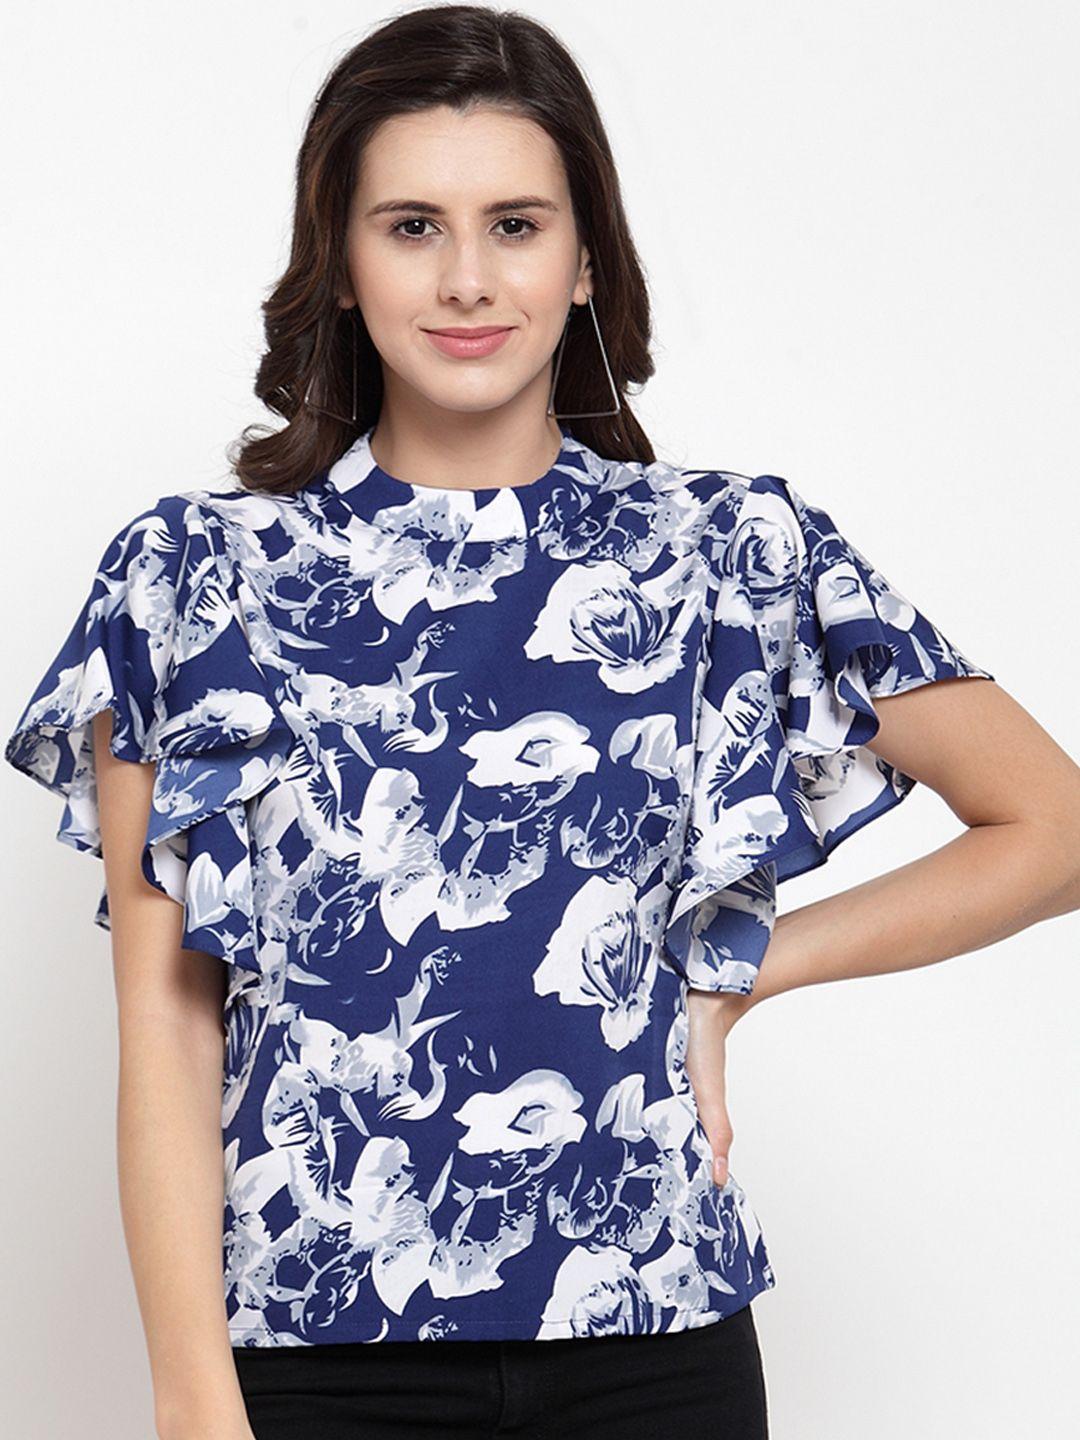 klauressa women white & navy blue printed top